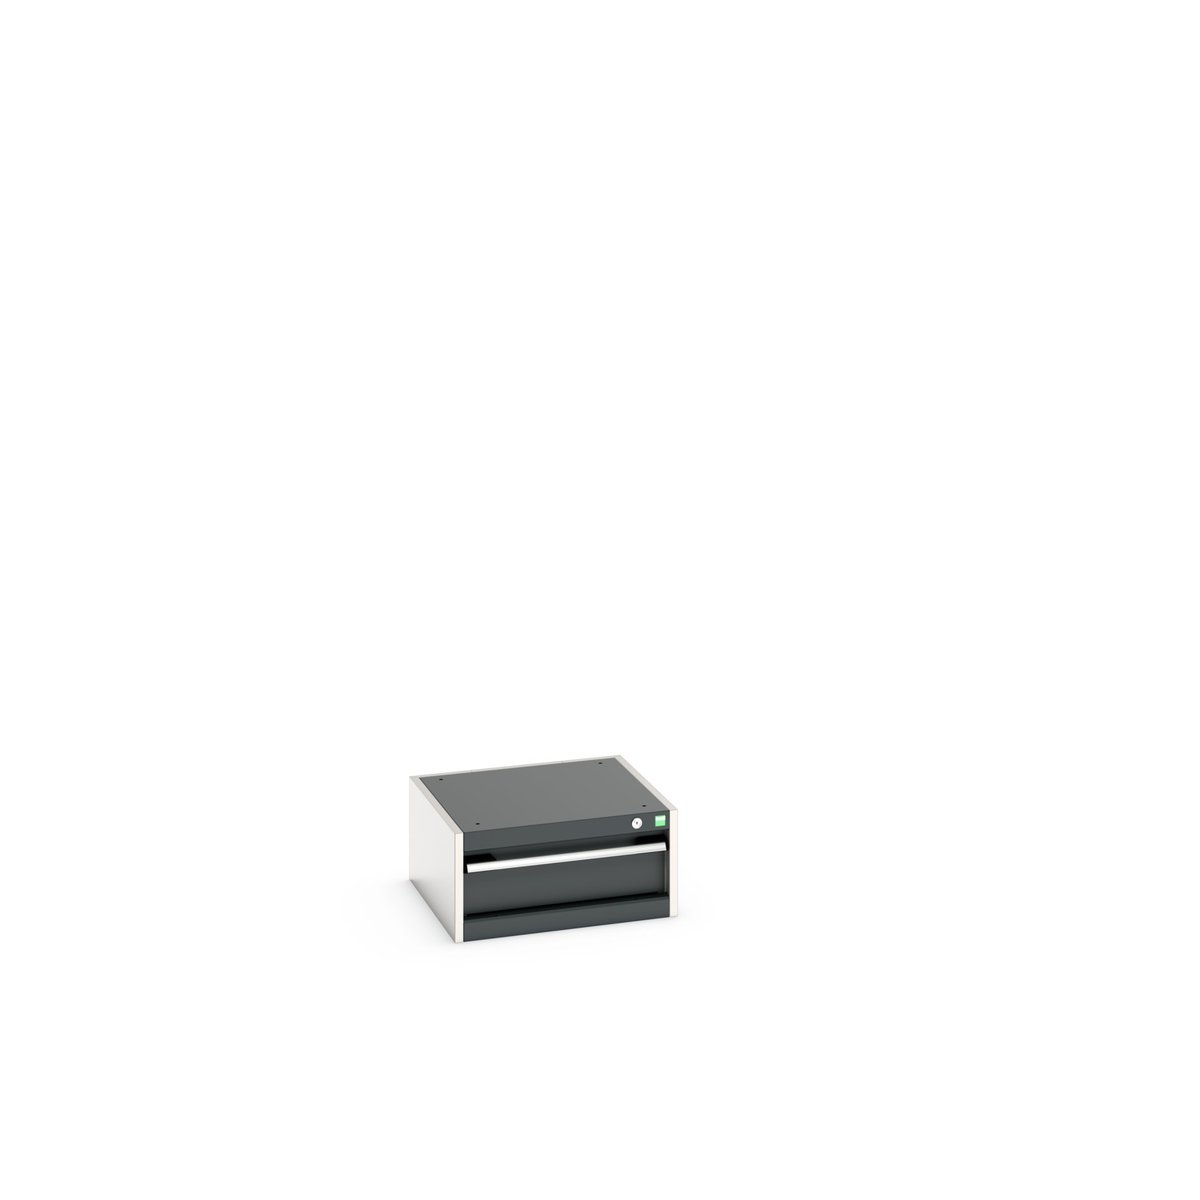 40010001. - cubio drawer cabinet